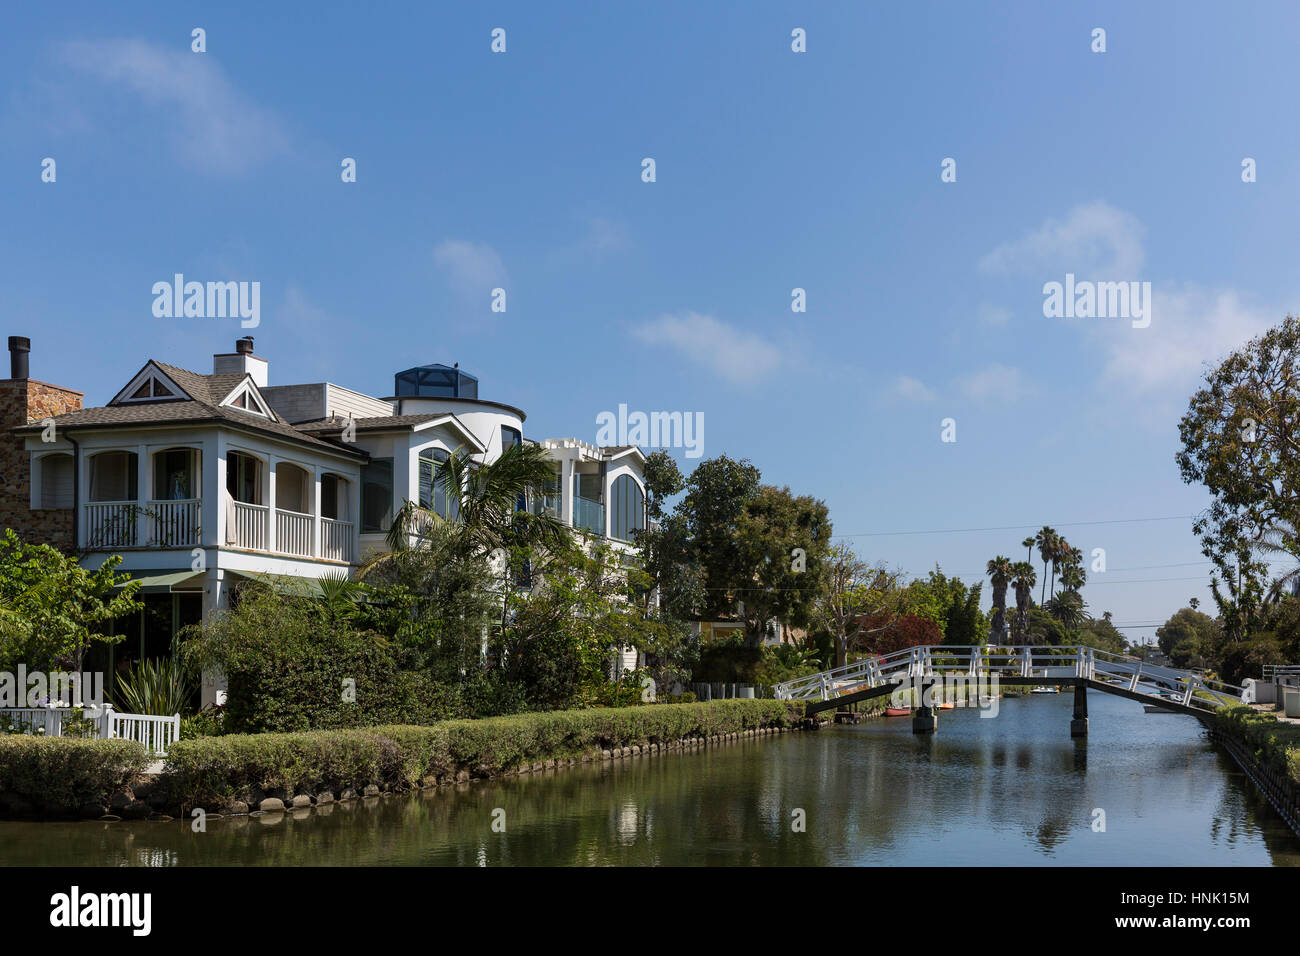 Venice Canal HIstoric District. Aug, 2016. California, U.S.A. Stock Photo